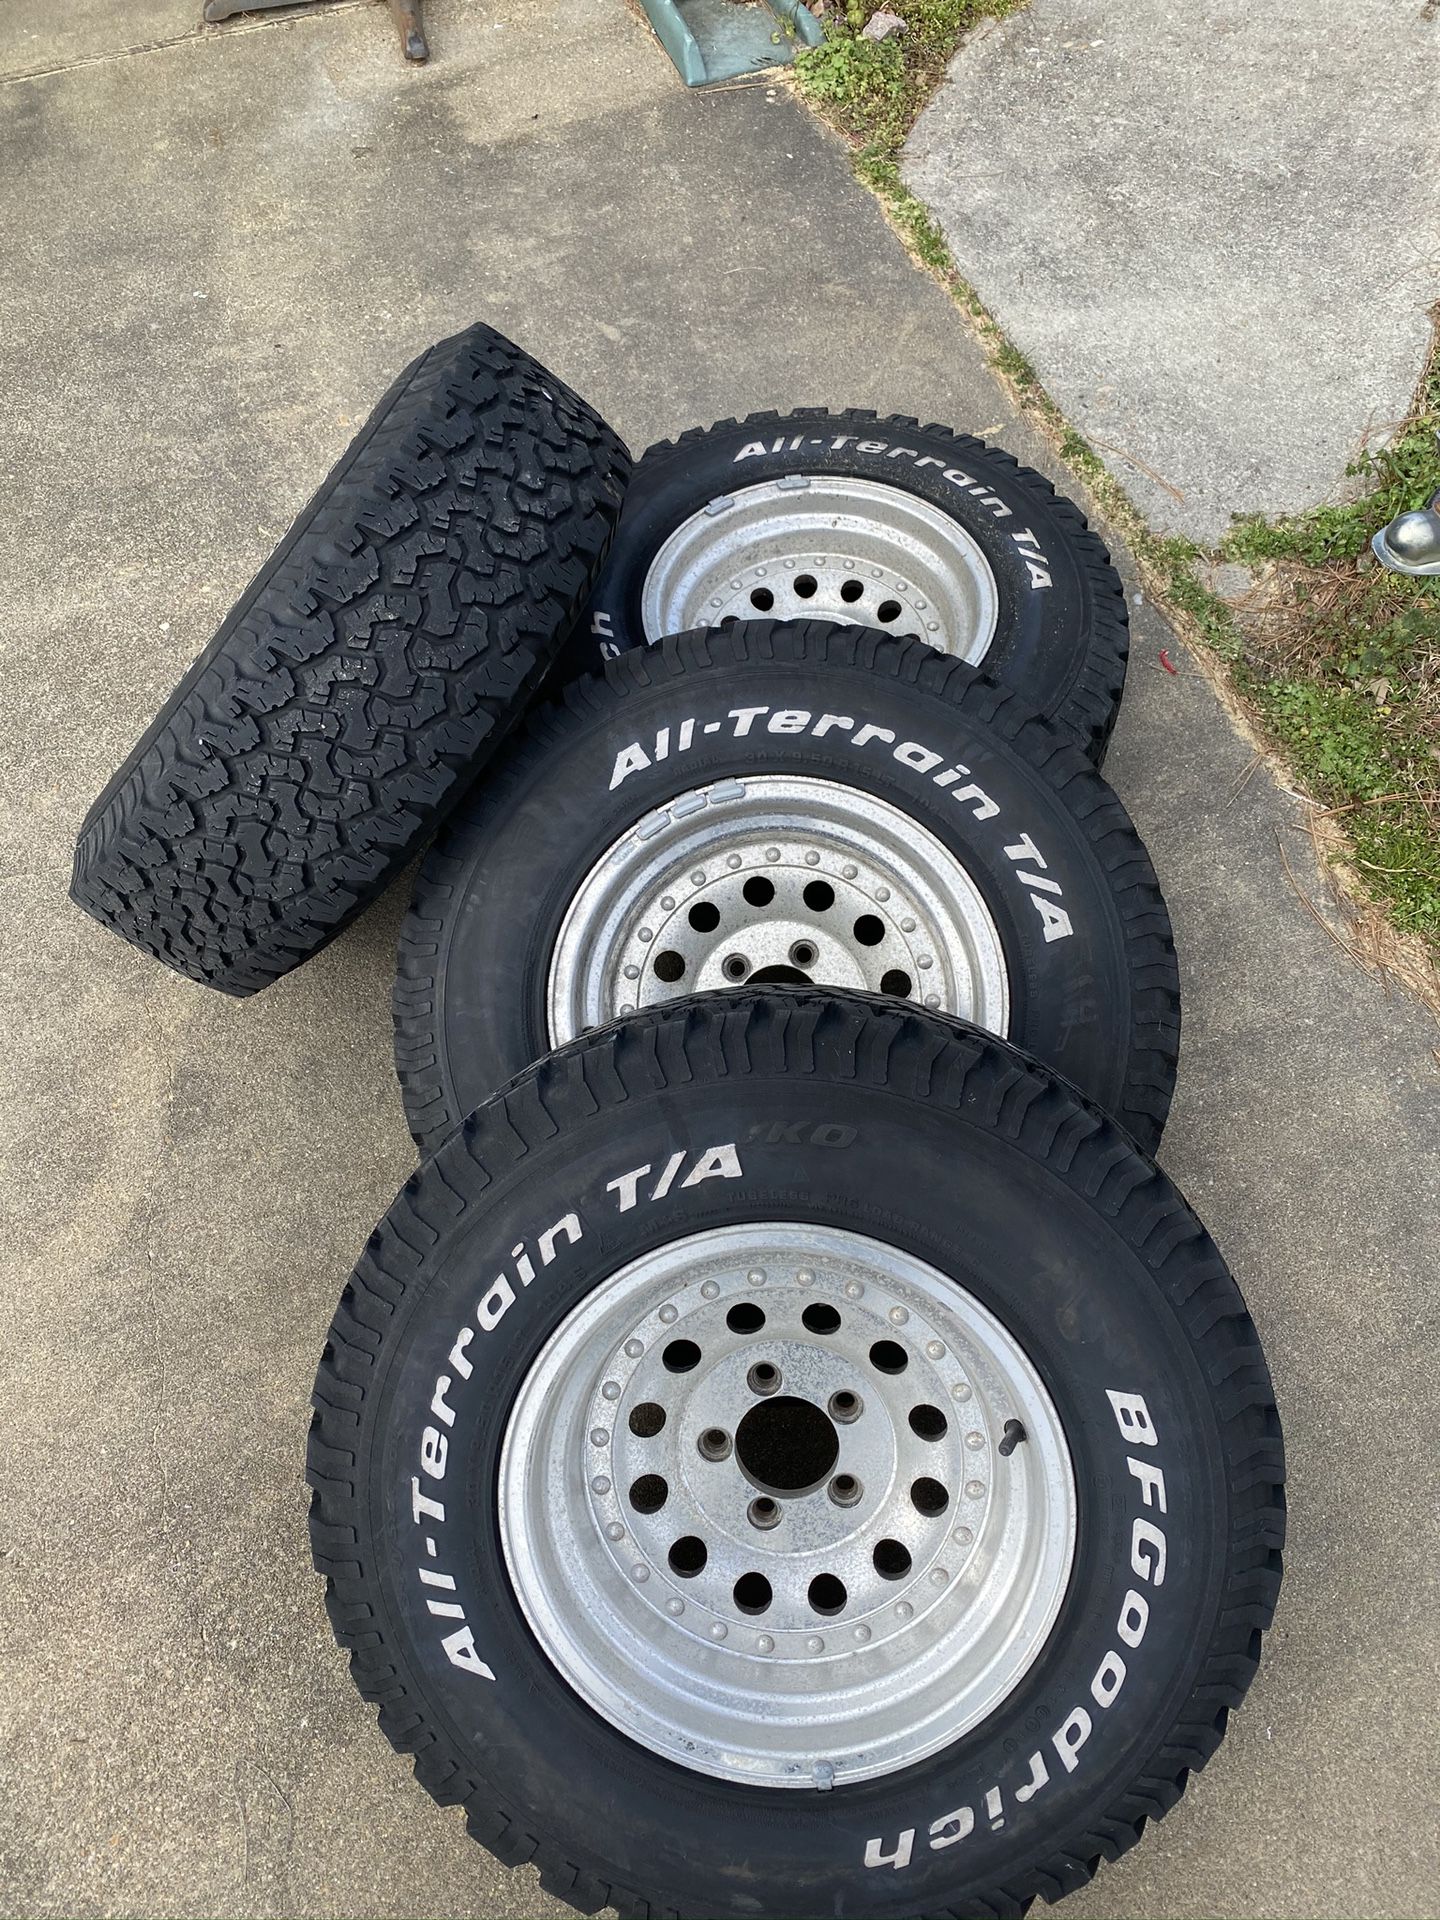 All-Terrain BF Goodrich tires and rims